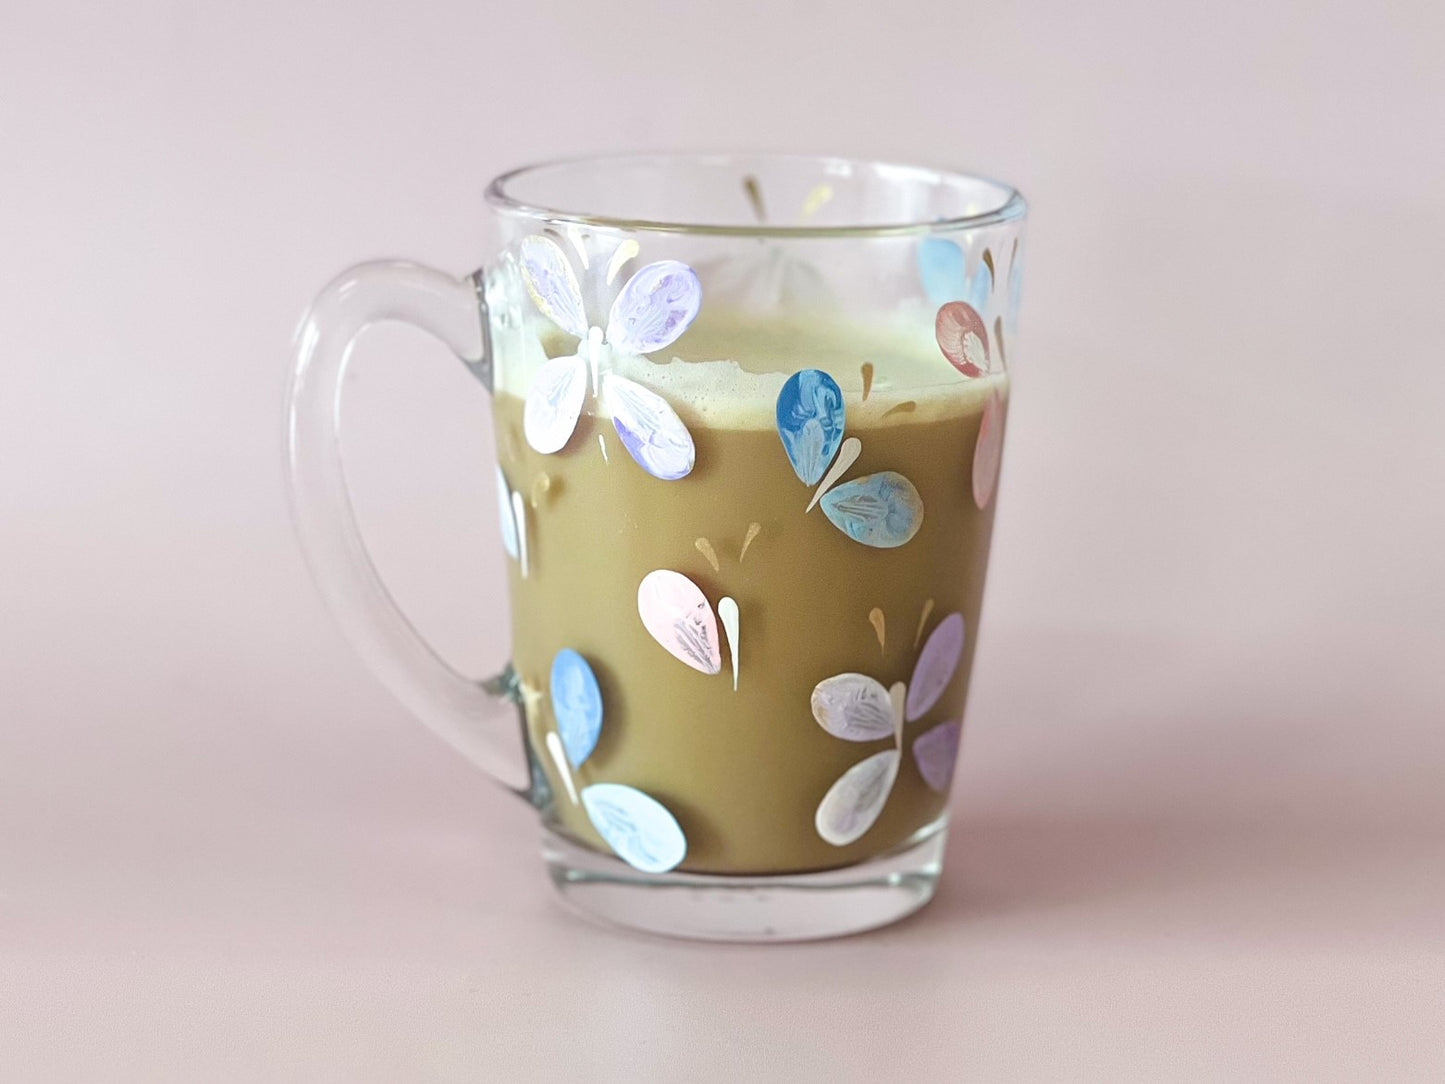 Hand-Painted Coffee Mug | Butterflies